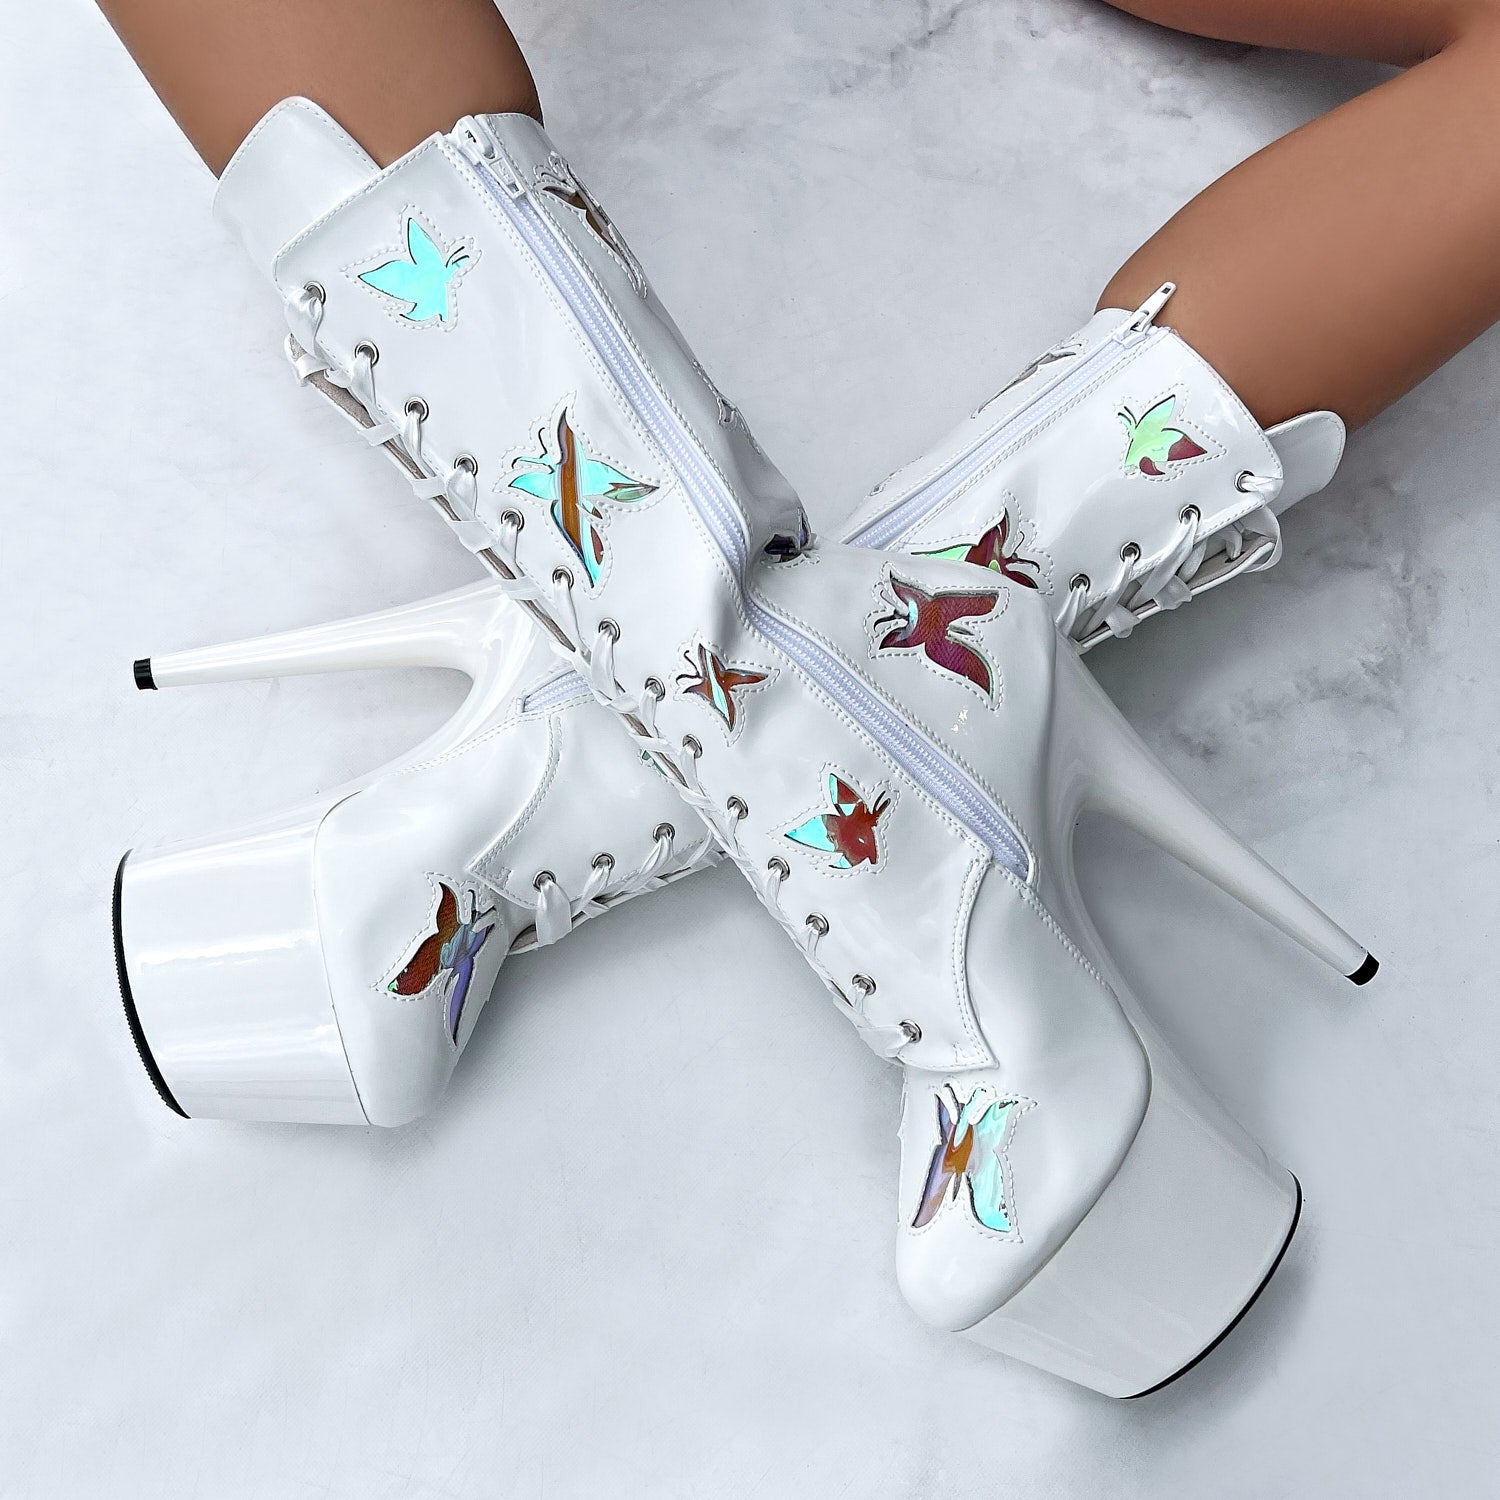 Butterfly Boot - White - 8 INCH, stripper shoe, stripper heel, pole heel, not a pleaser, platform, dancer, pole dance, floor work